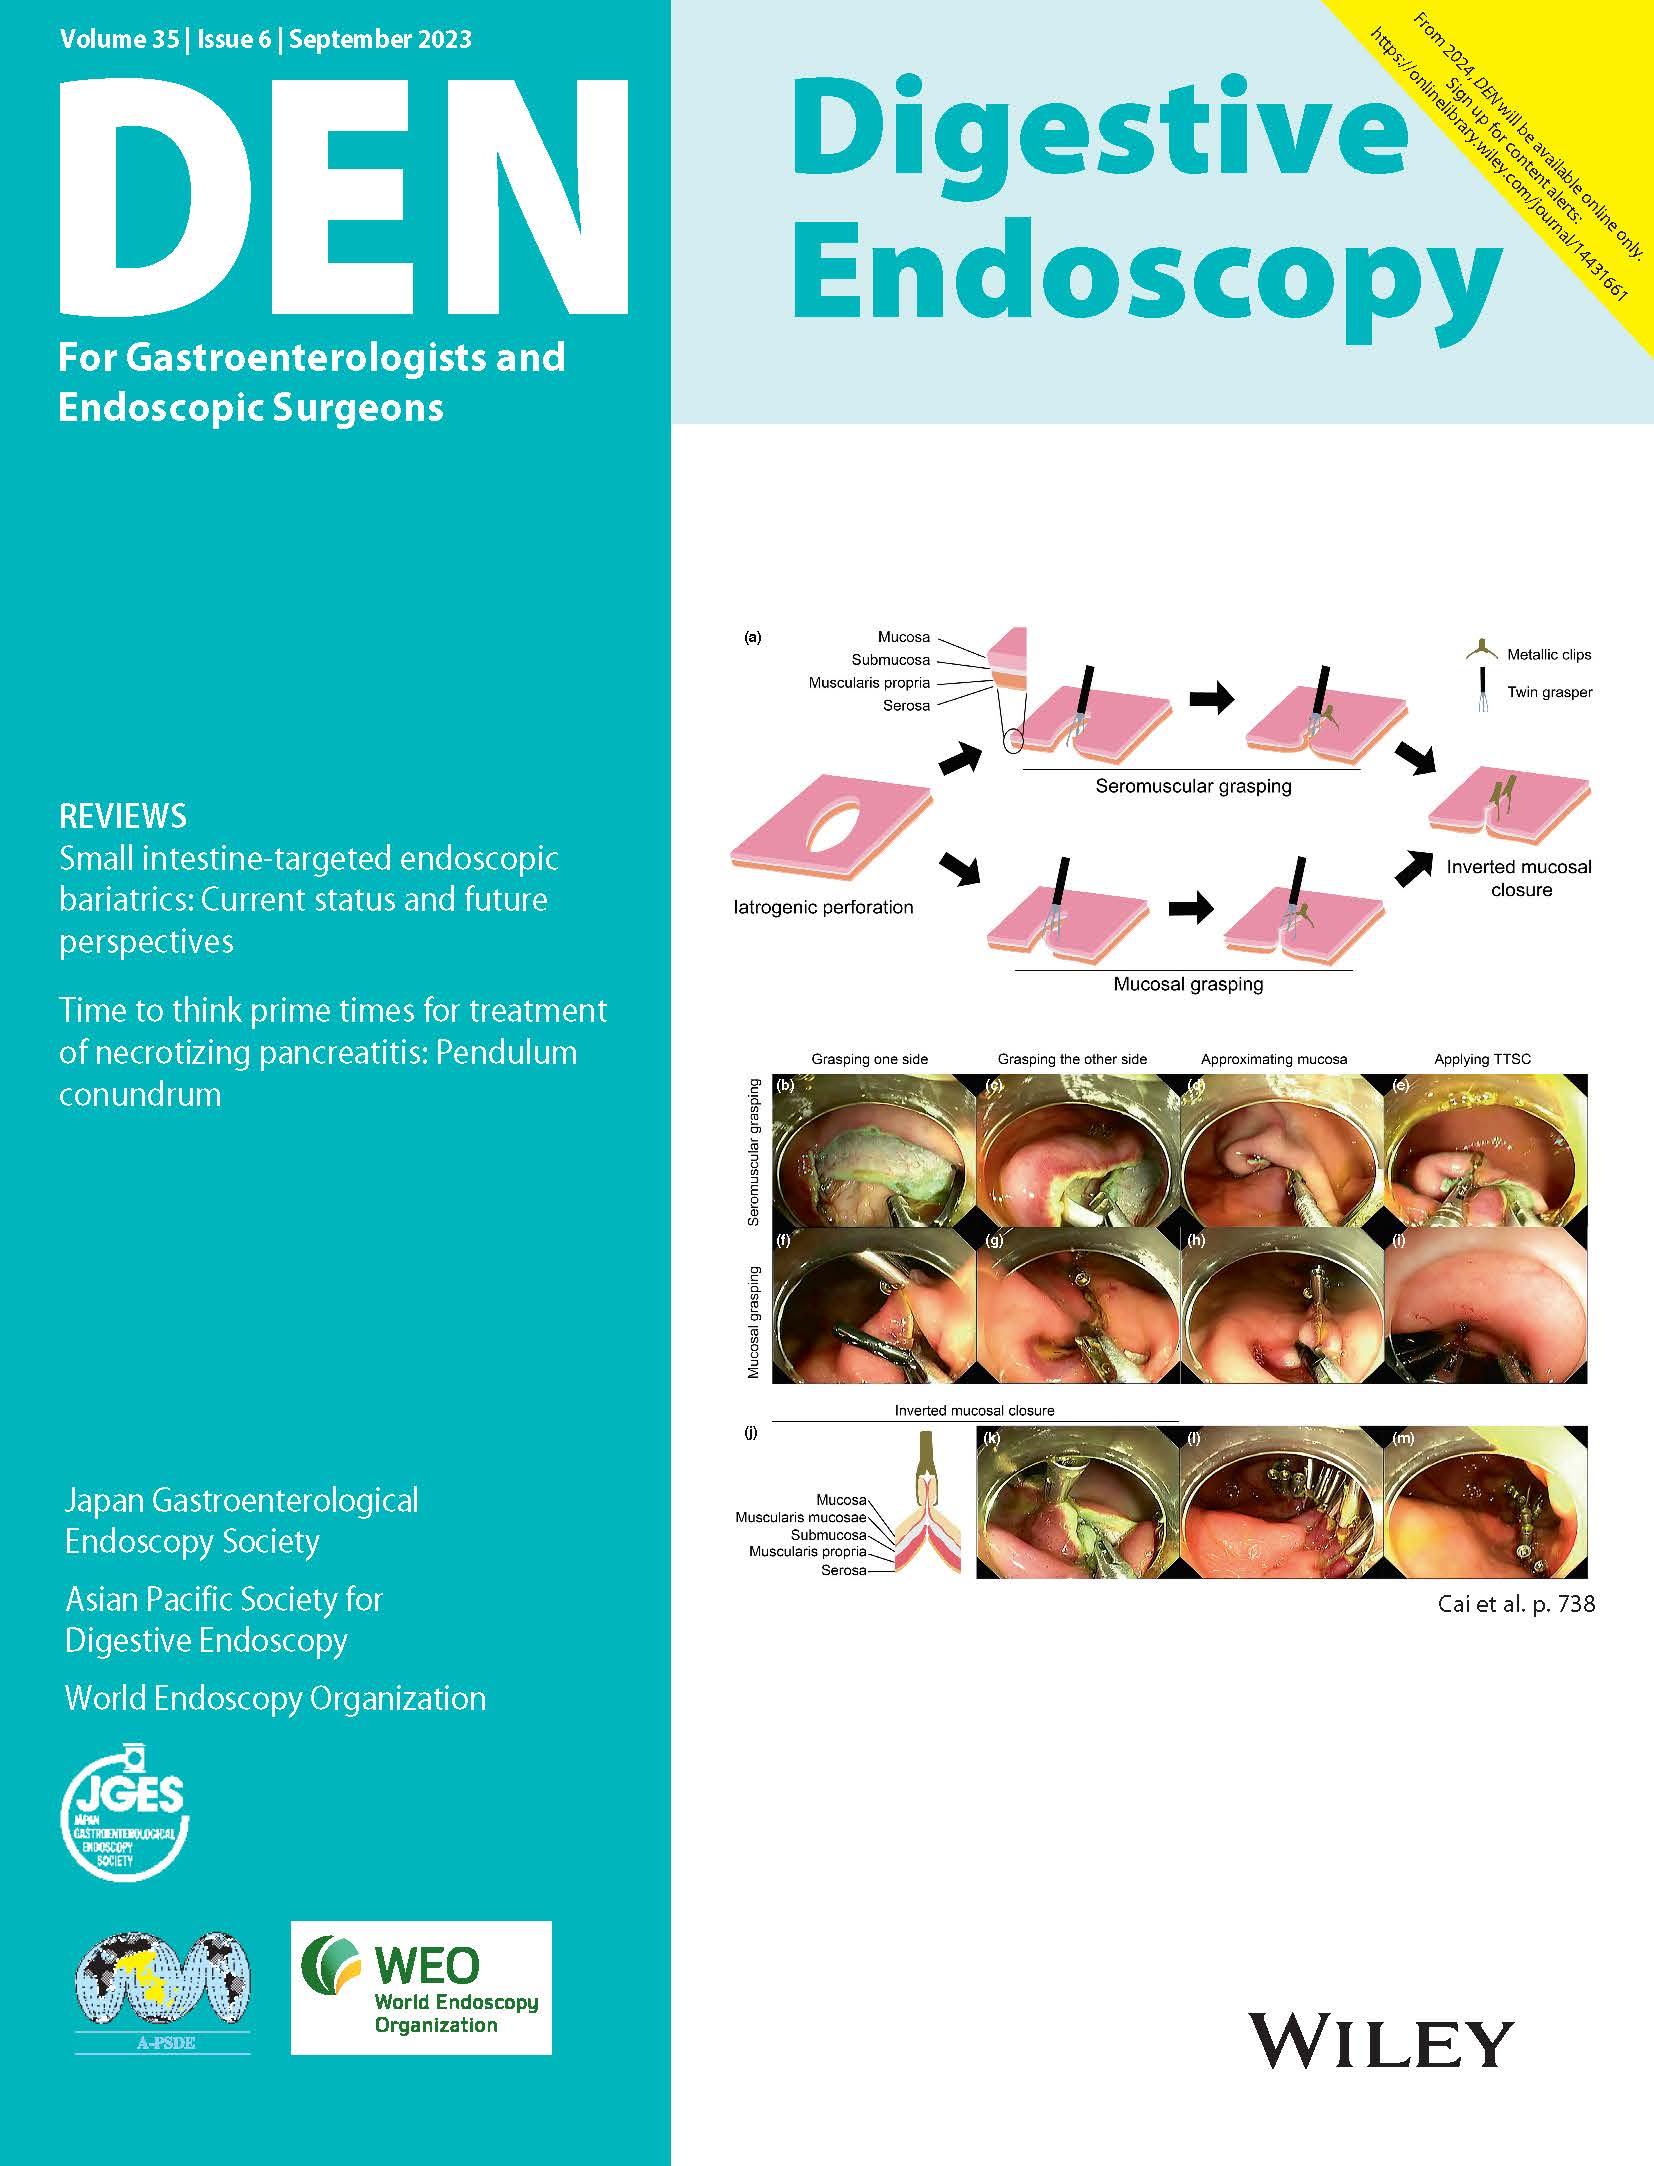 Digestive Endoscopy Vol35-6